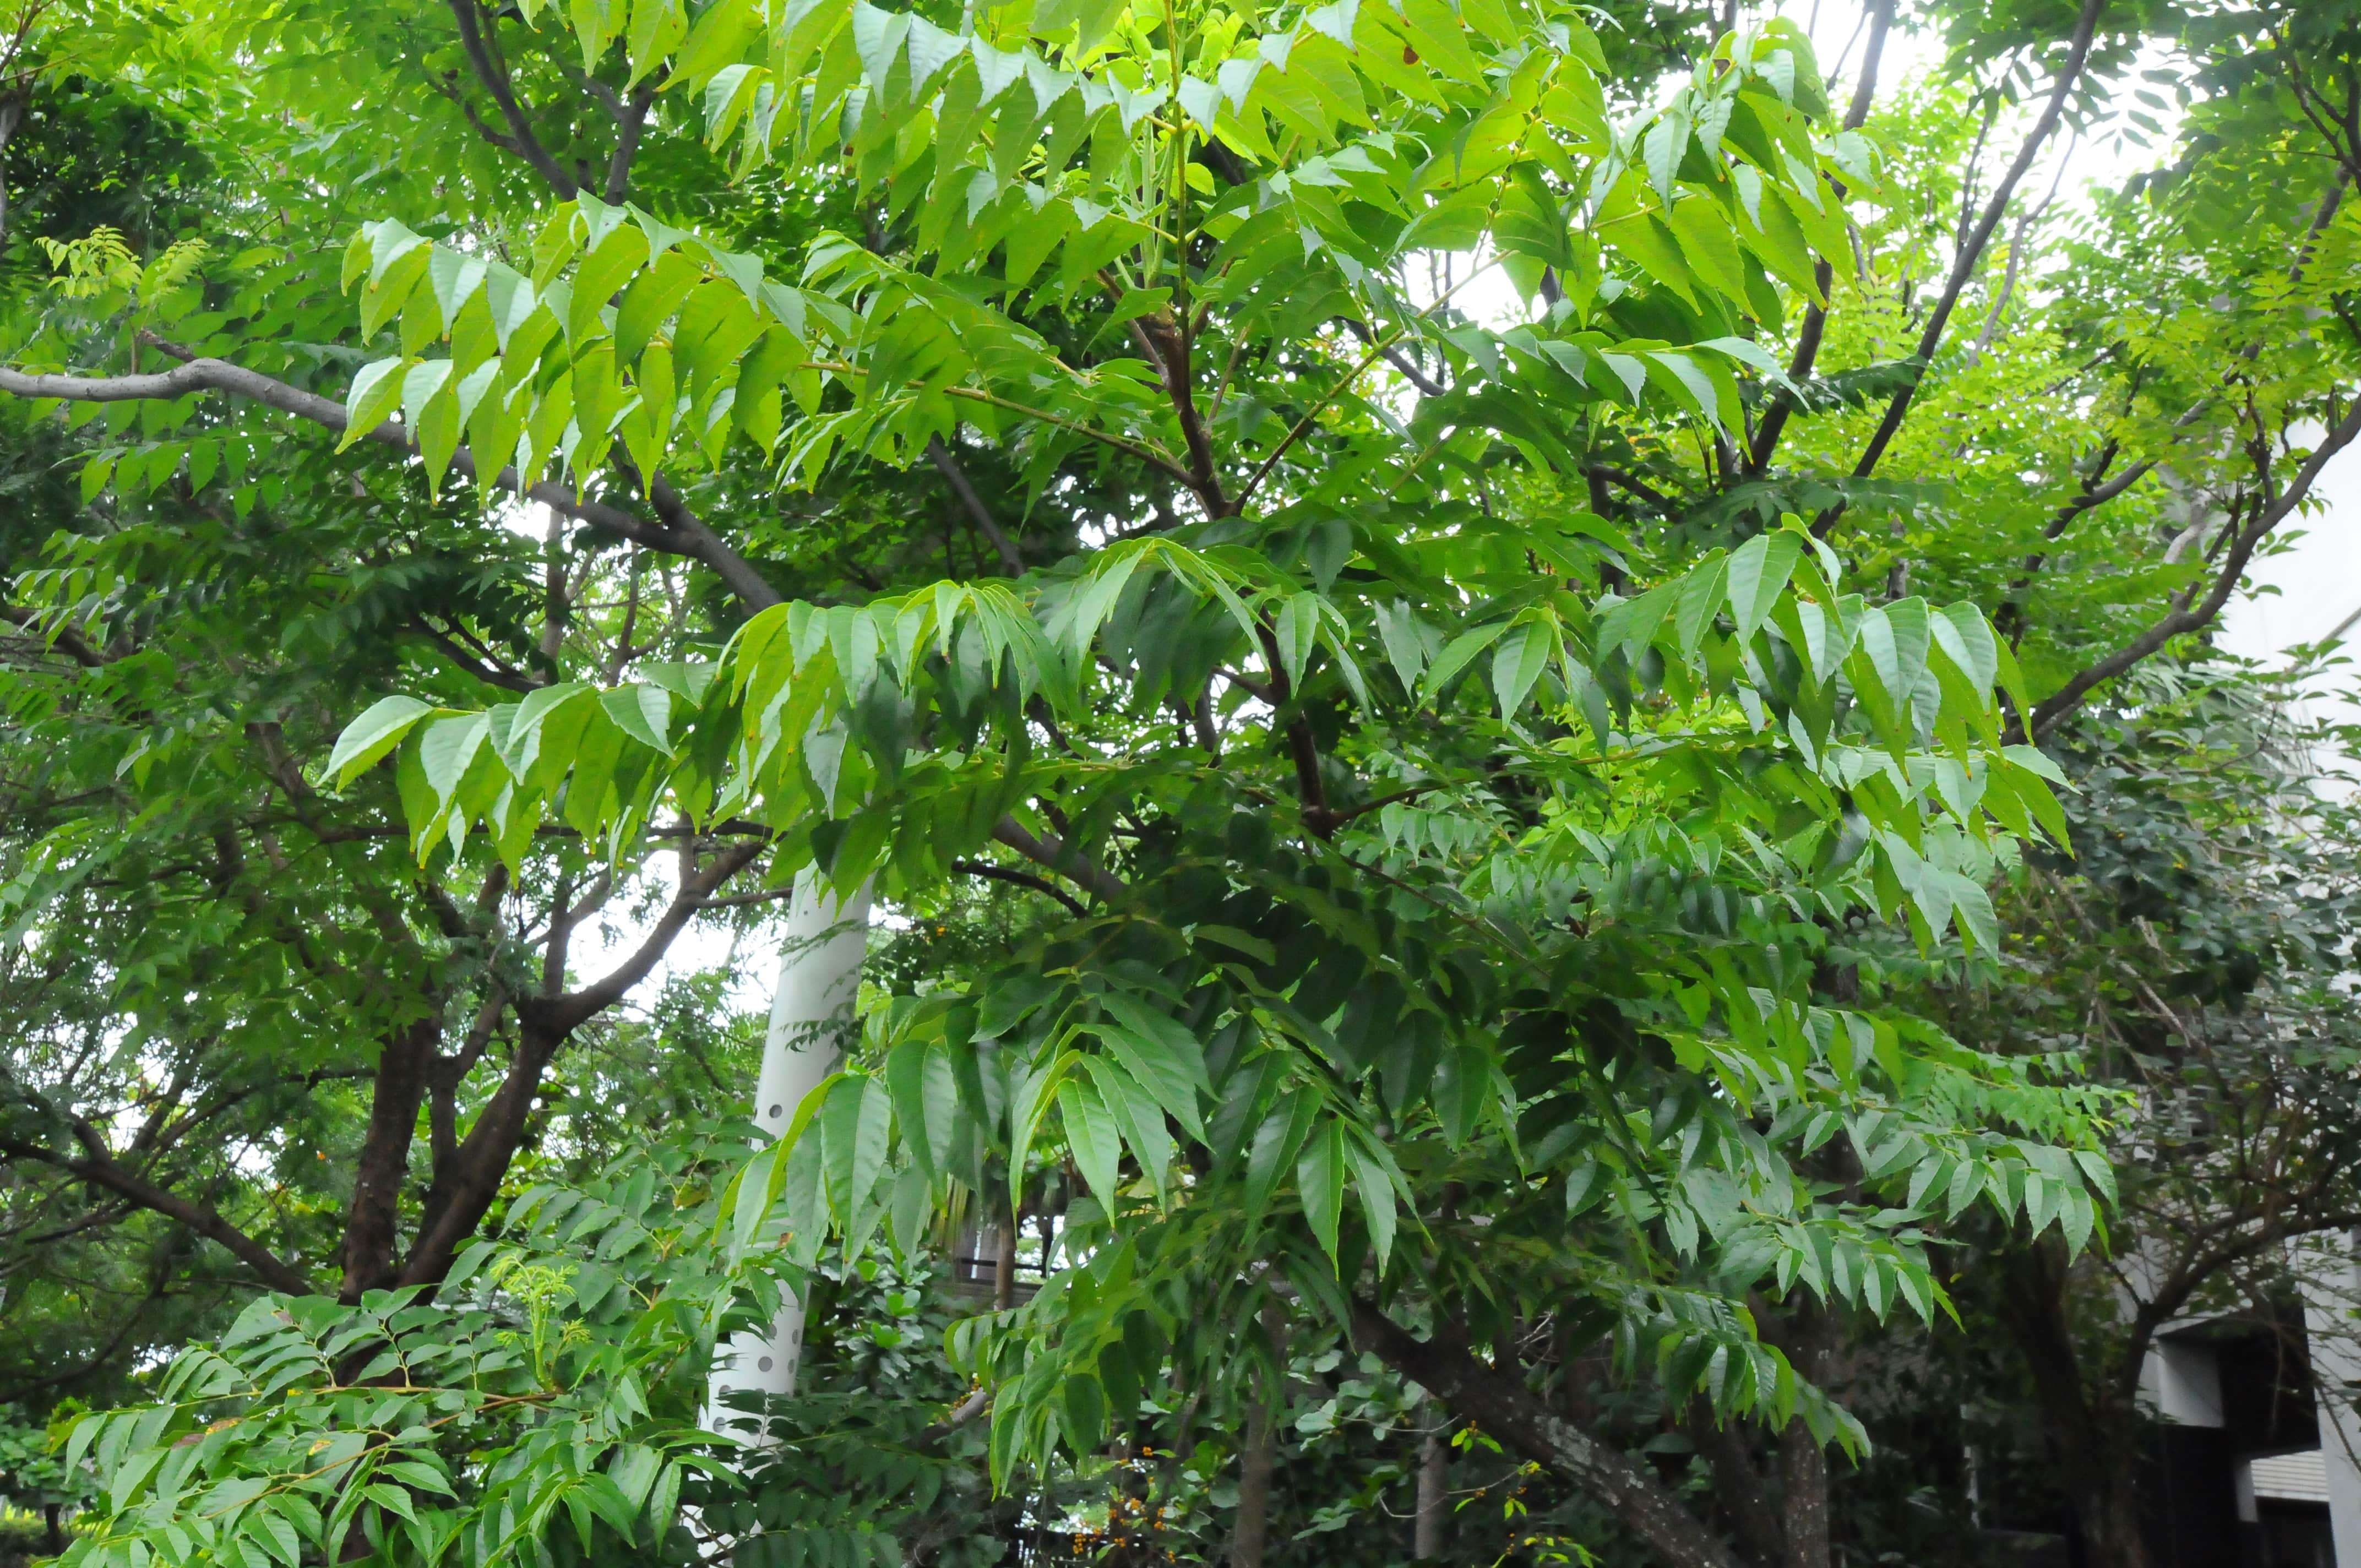 Taiwanese Rain Tree